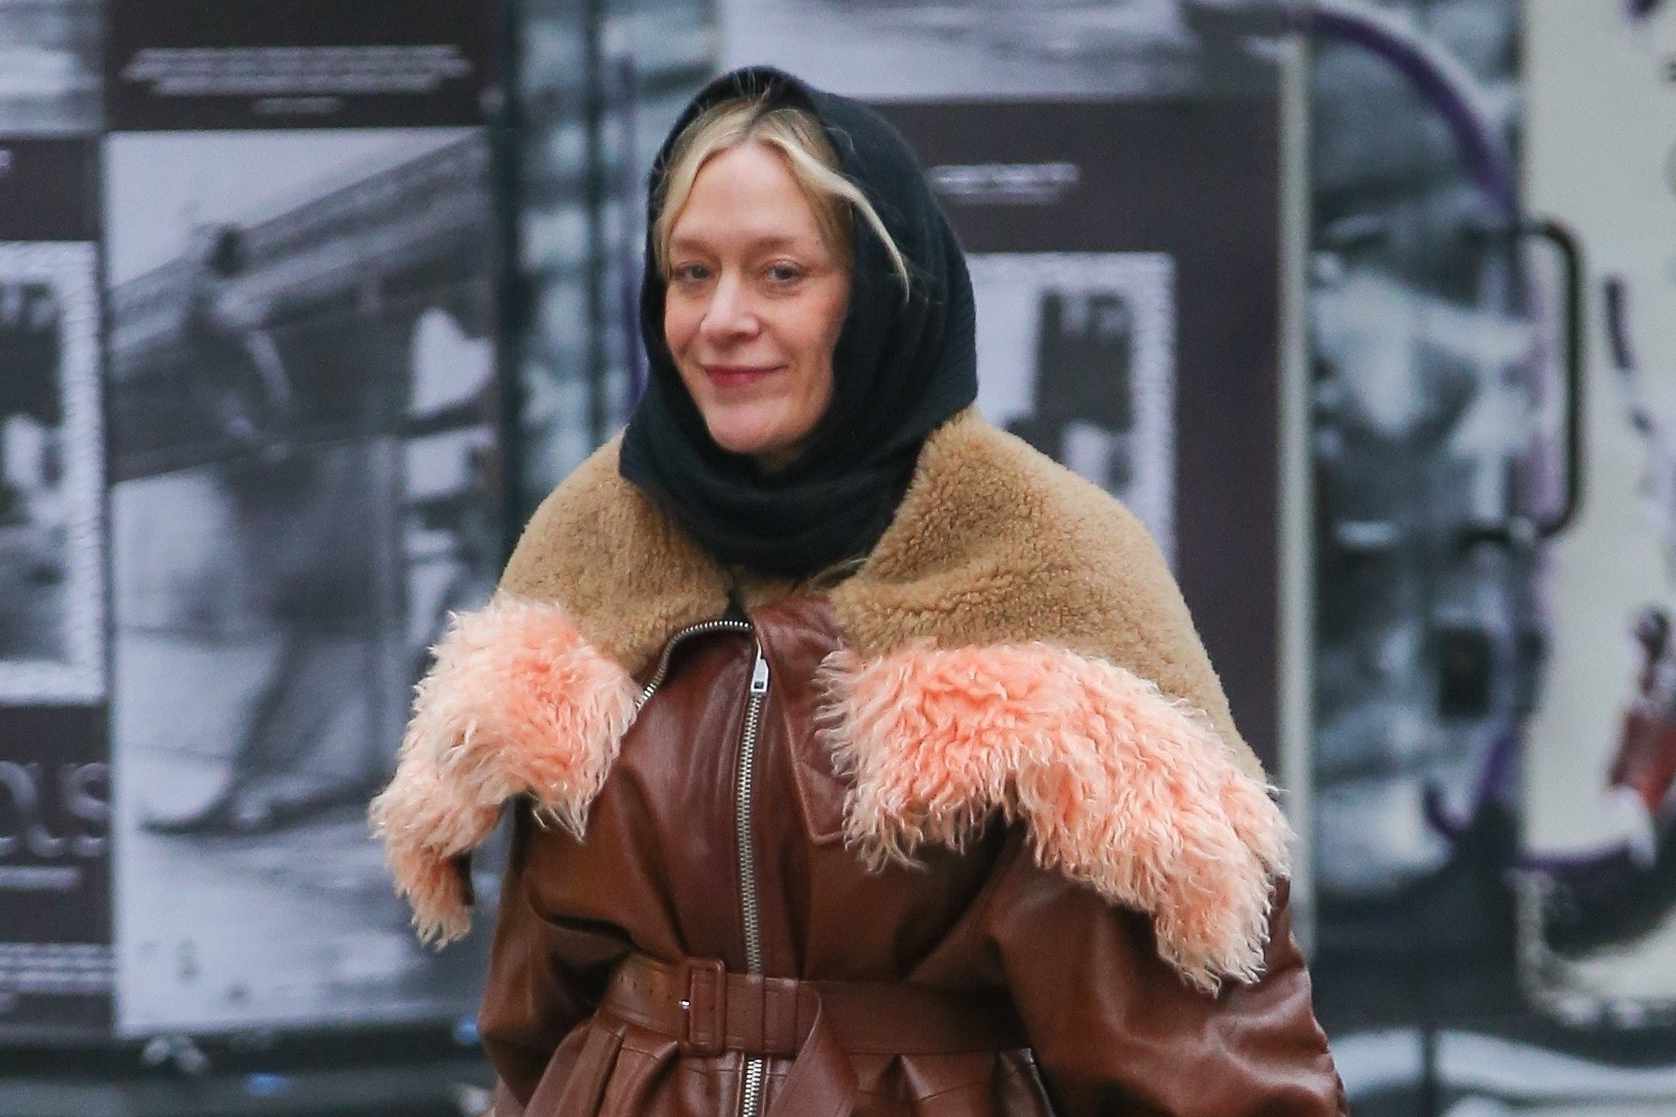 Chloe Sevigny wears a fur prada jacket in new york on January 30